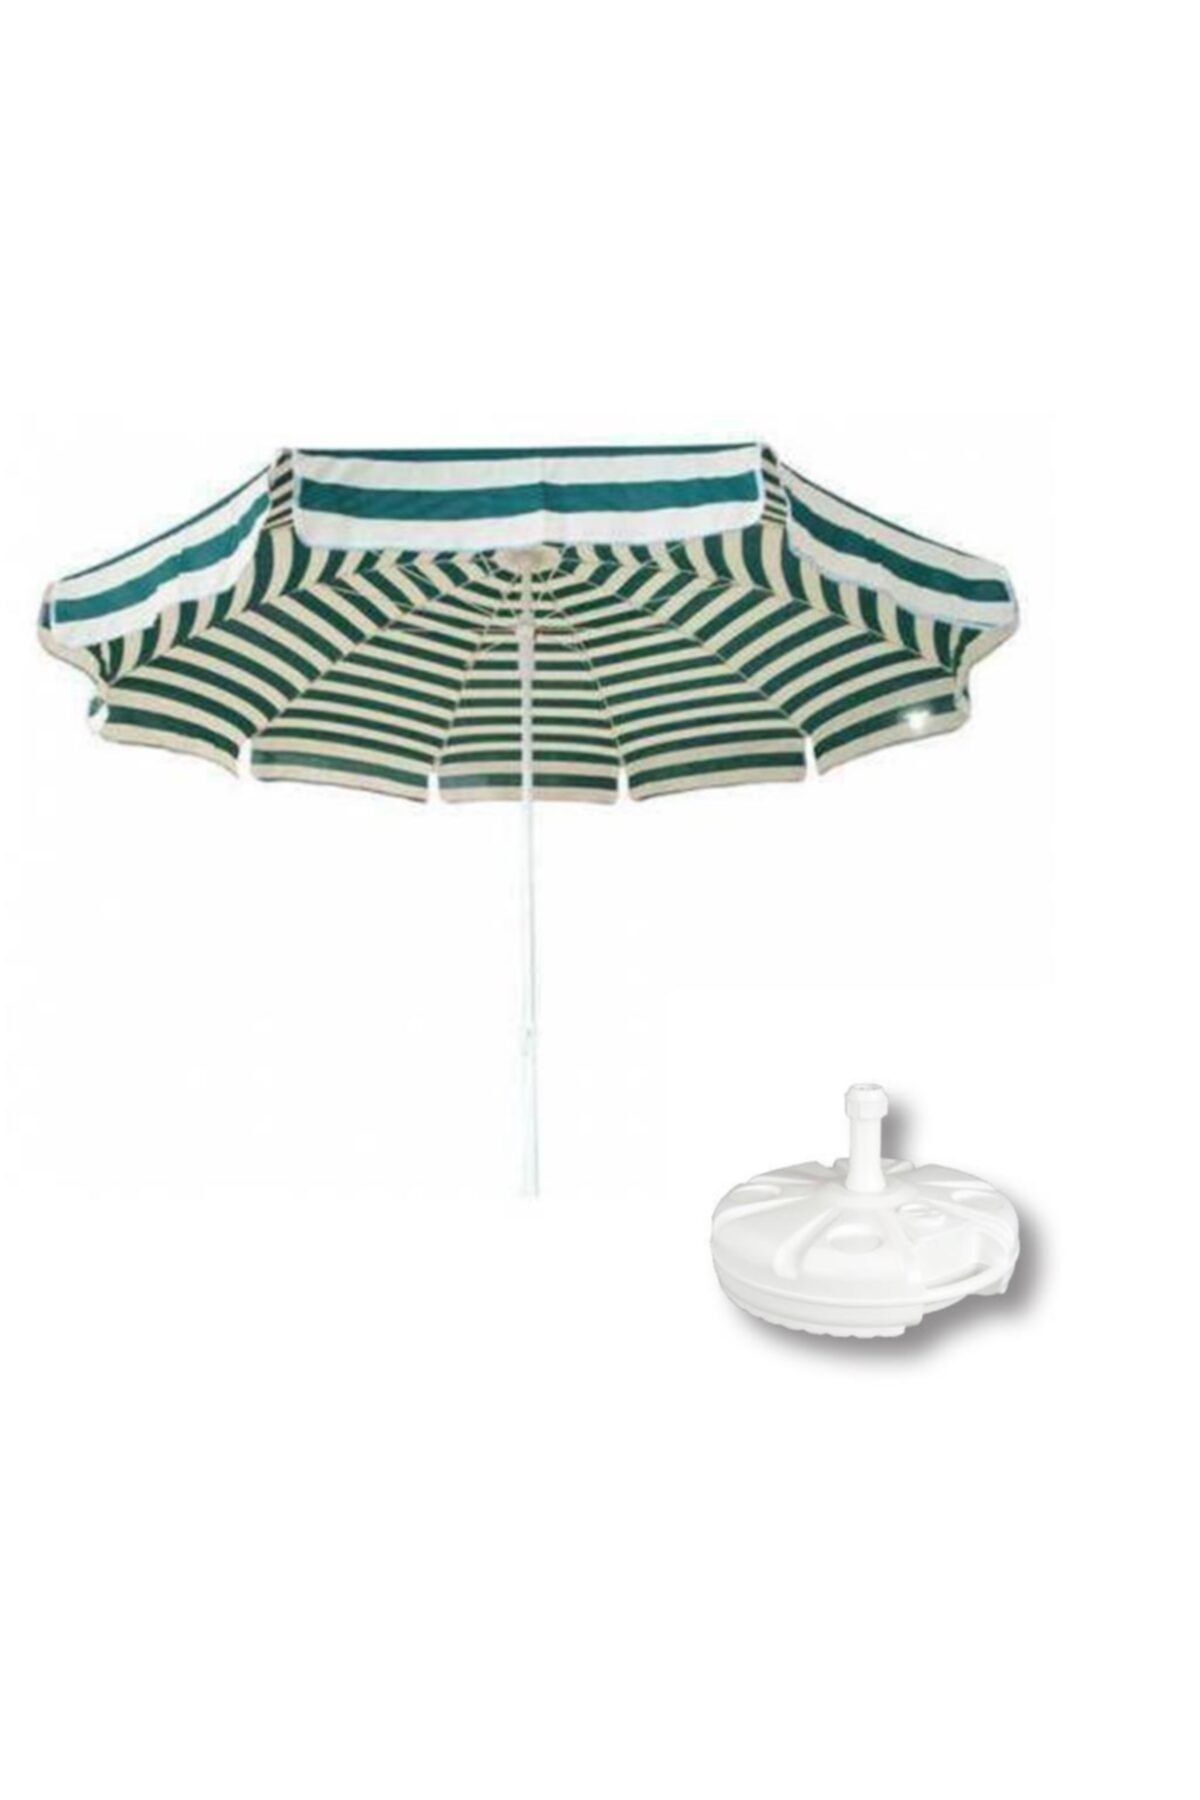 Mashotrend Plaj Şemsiyesi - Balkon - Bahçe - Teras Şemsiyesi - 2metre Şemsiye + Şemsiye Bidonu